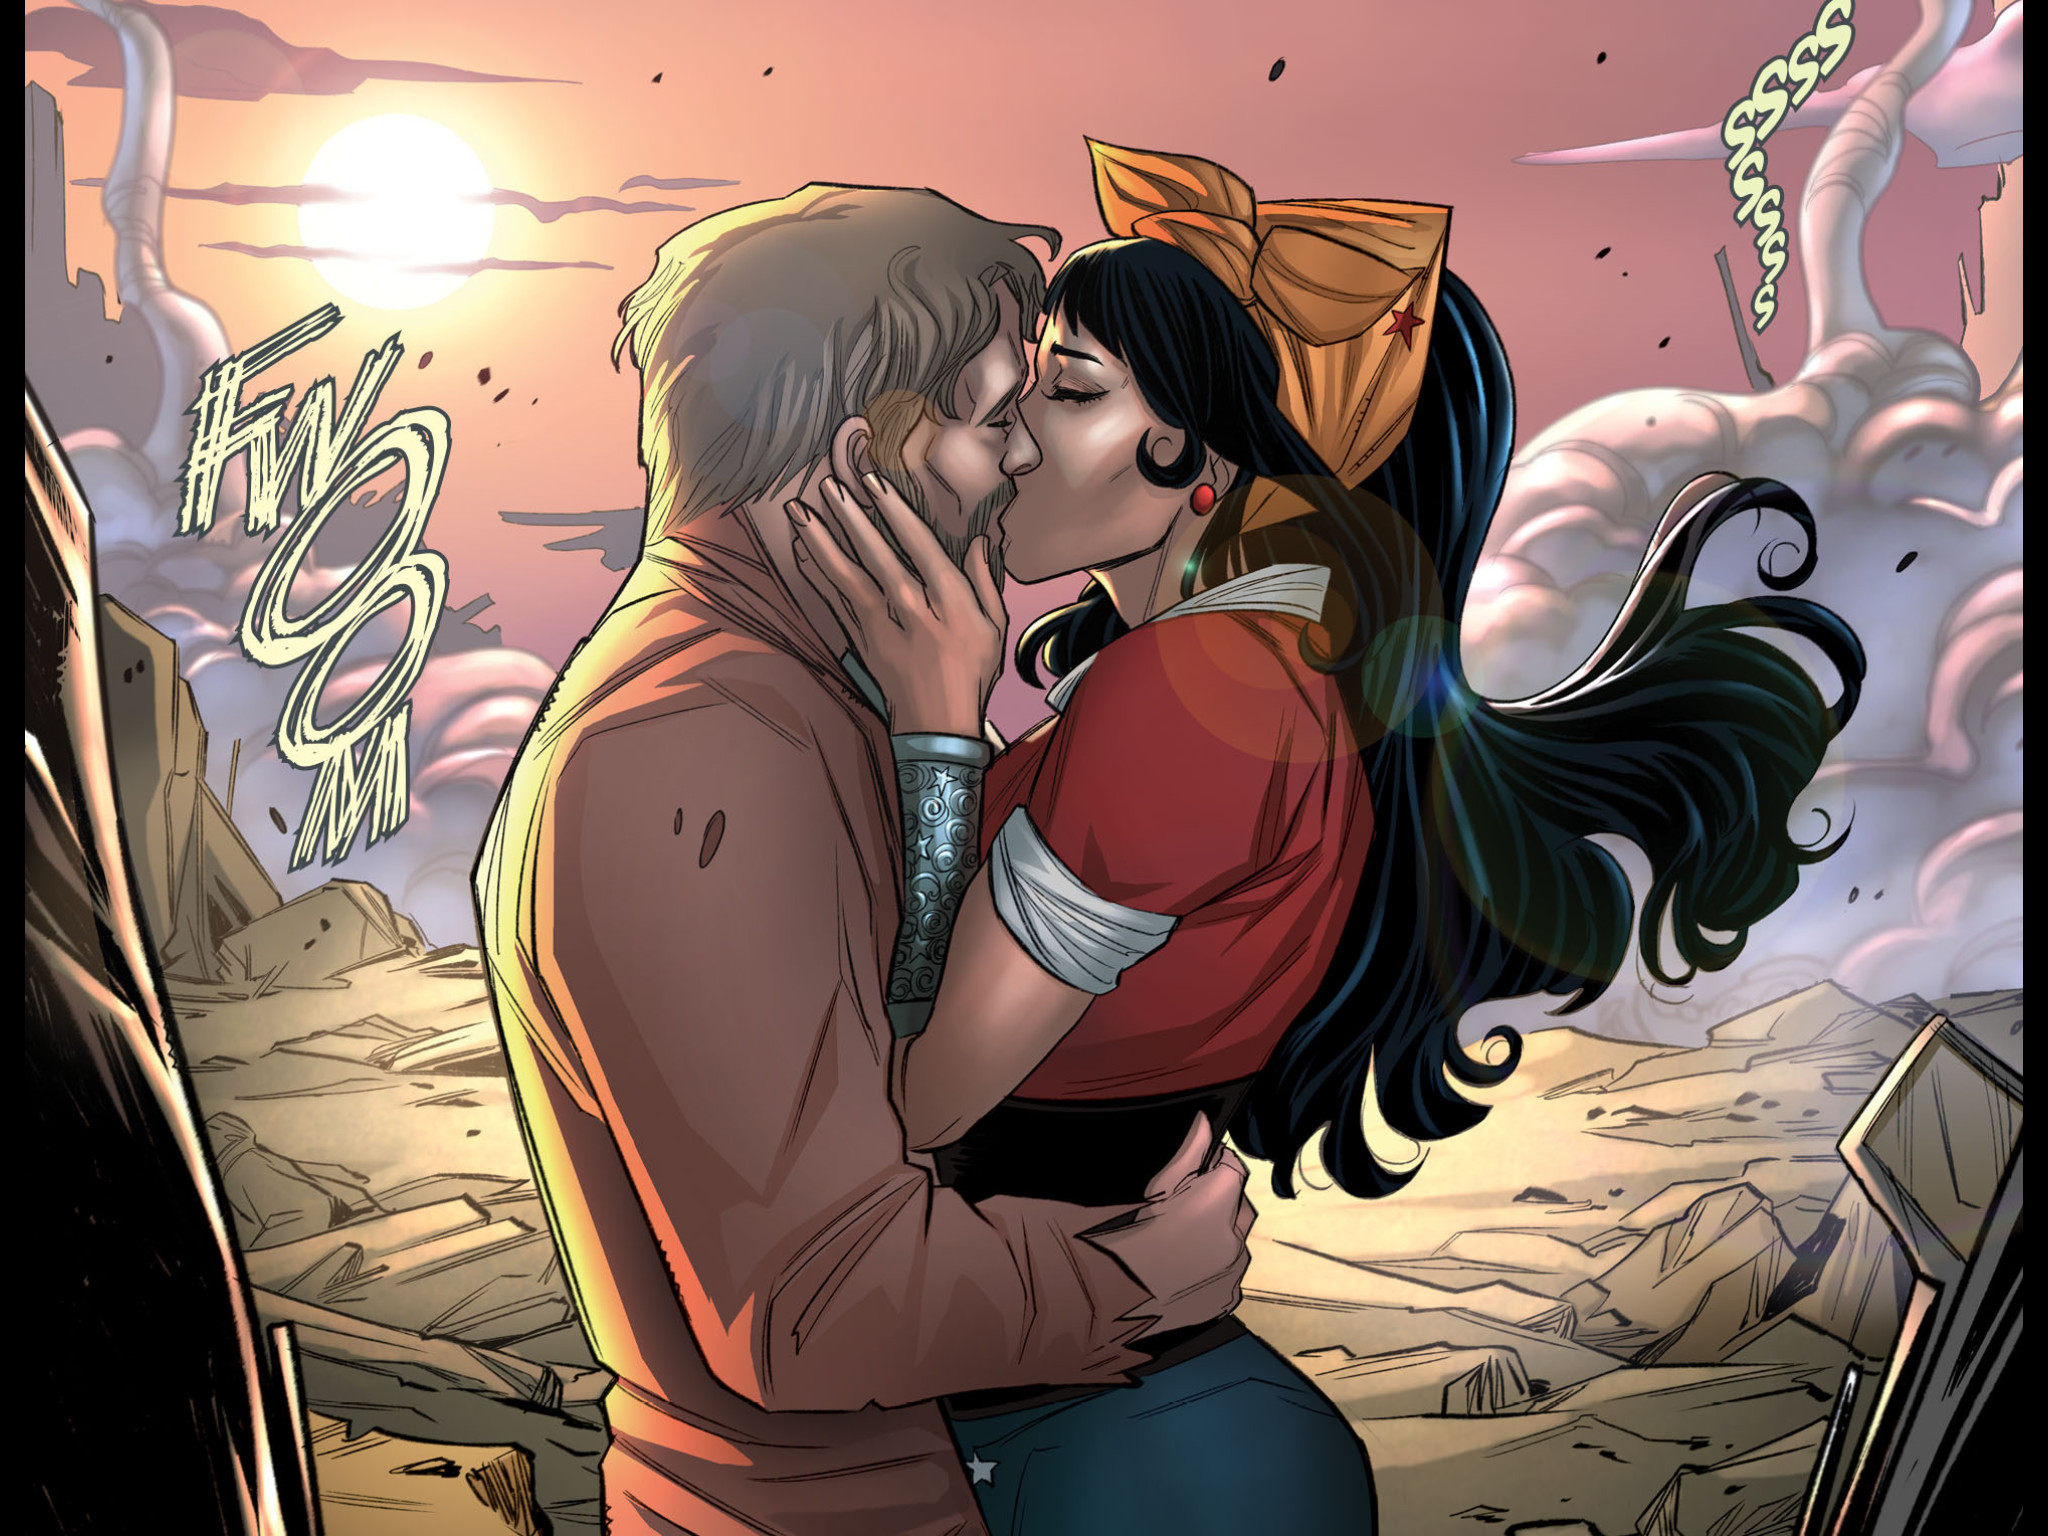 Steve and Diana kiss